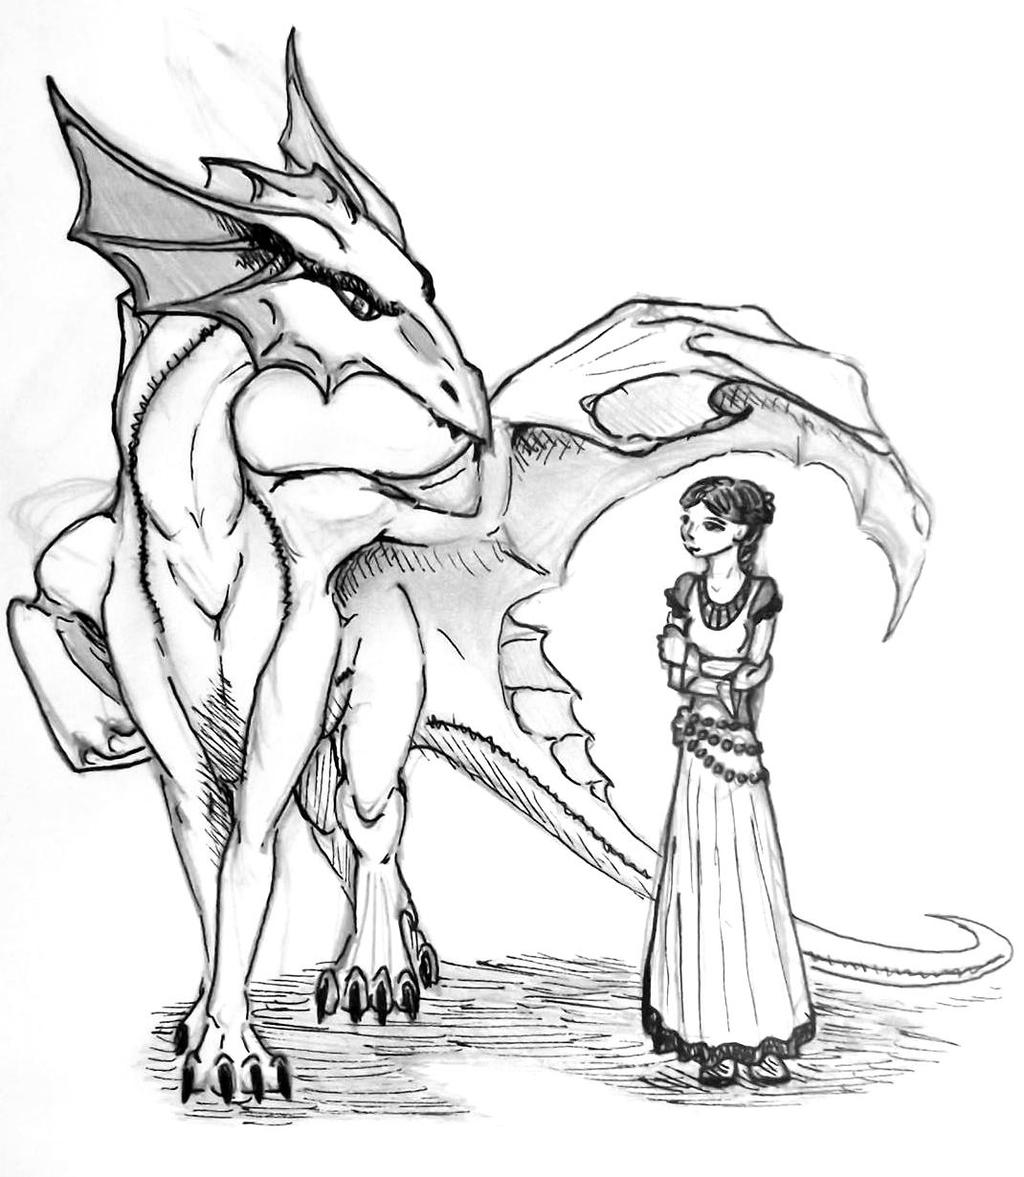 dragon_and_her_lady_by_tsukiamemi-d7b66rh.jpg